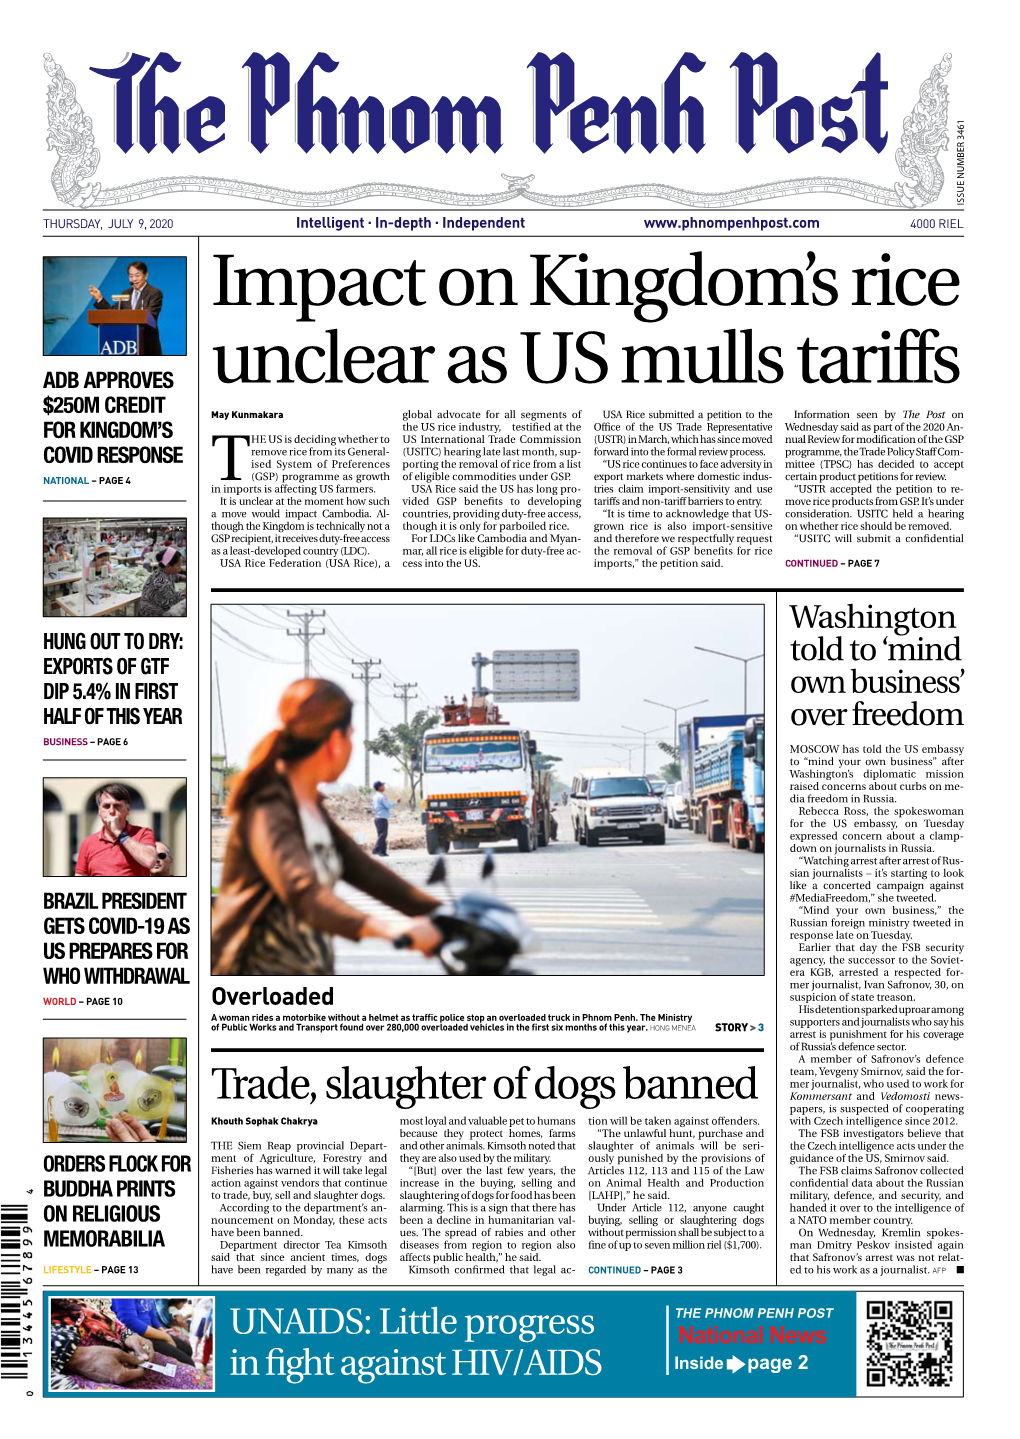 Impact on Kingdom's Rice Unclear As US Mulls Tariffs